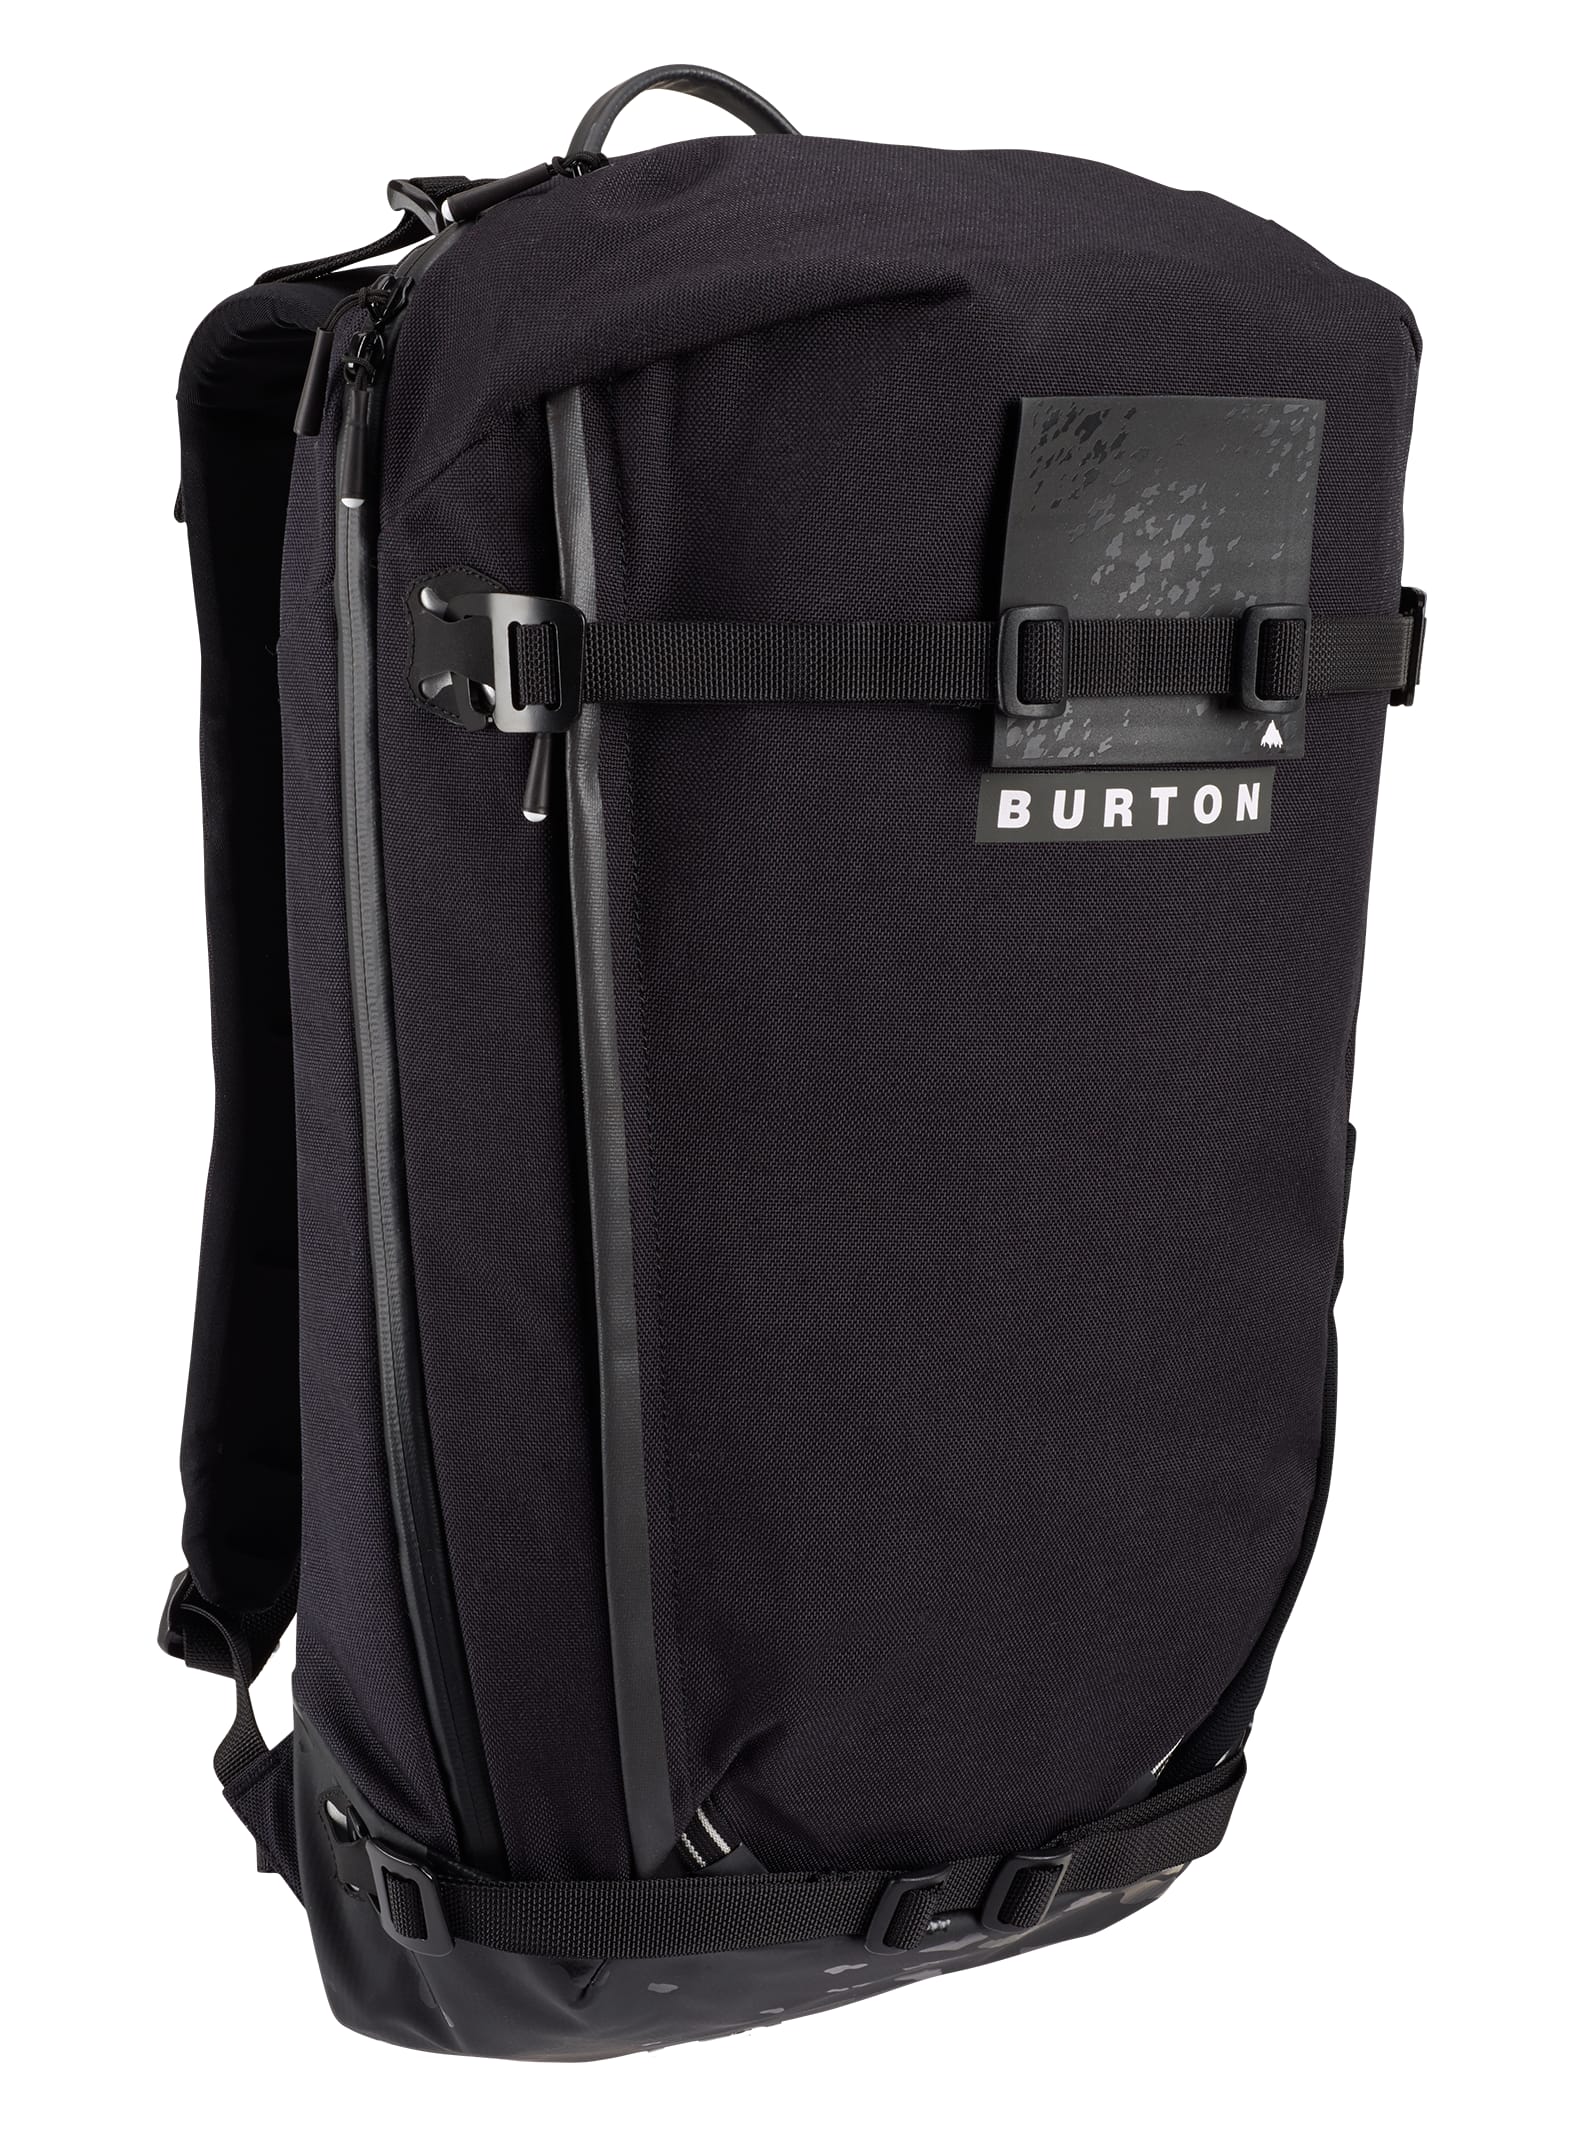 Burton / Gorge Backpack